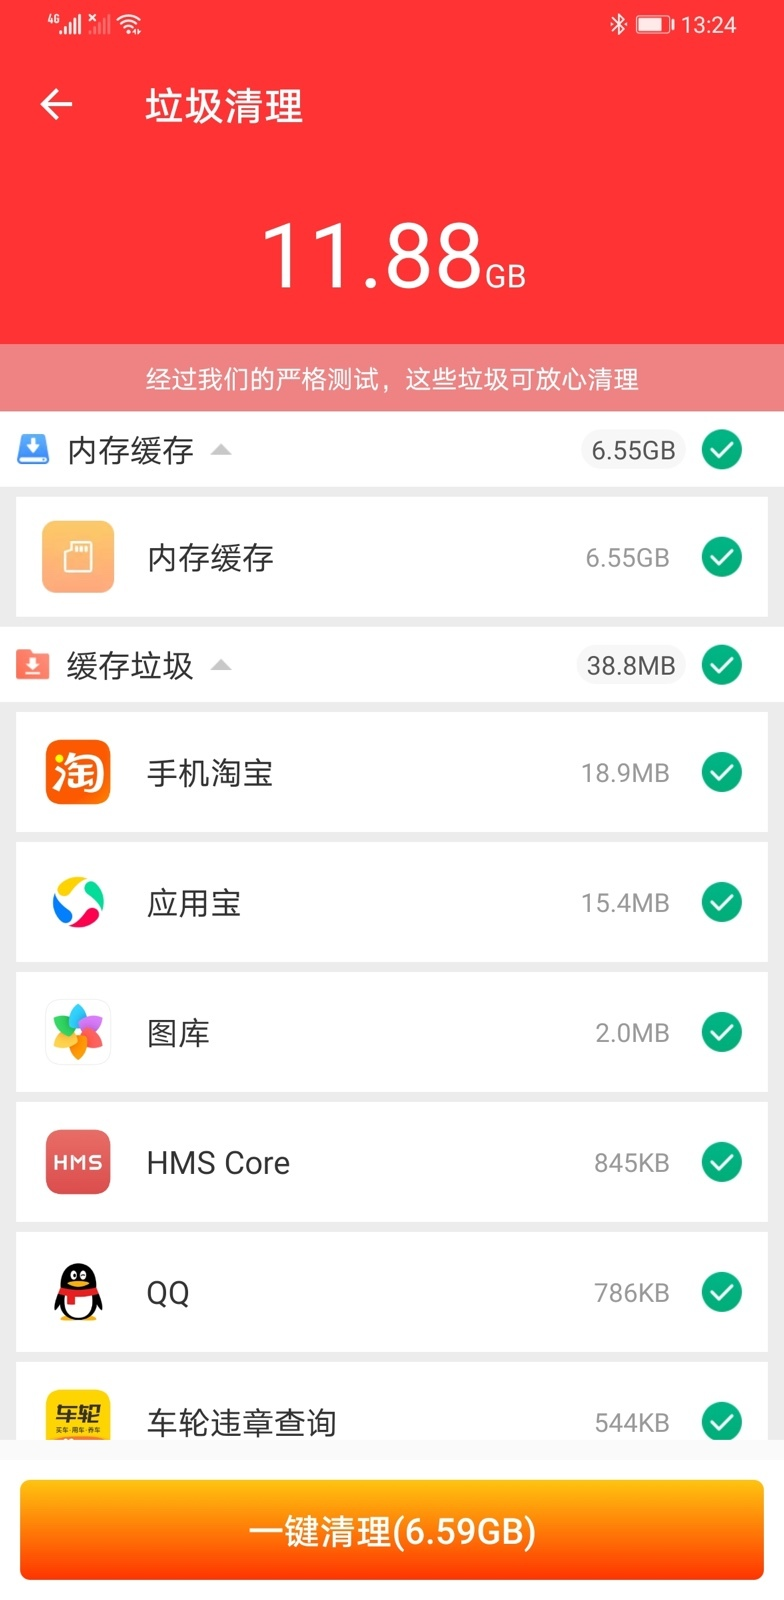 WiFi免费王appv1.2.0